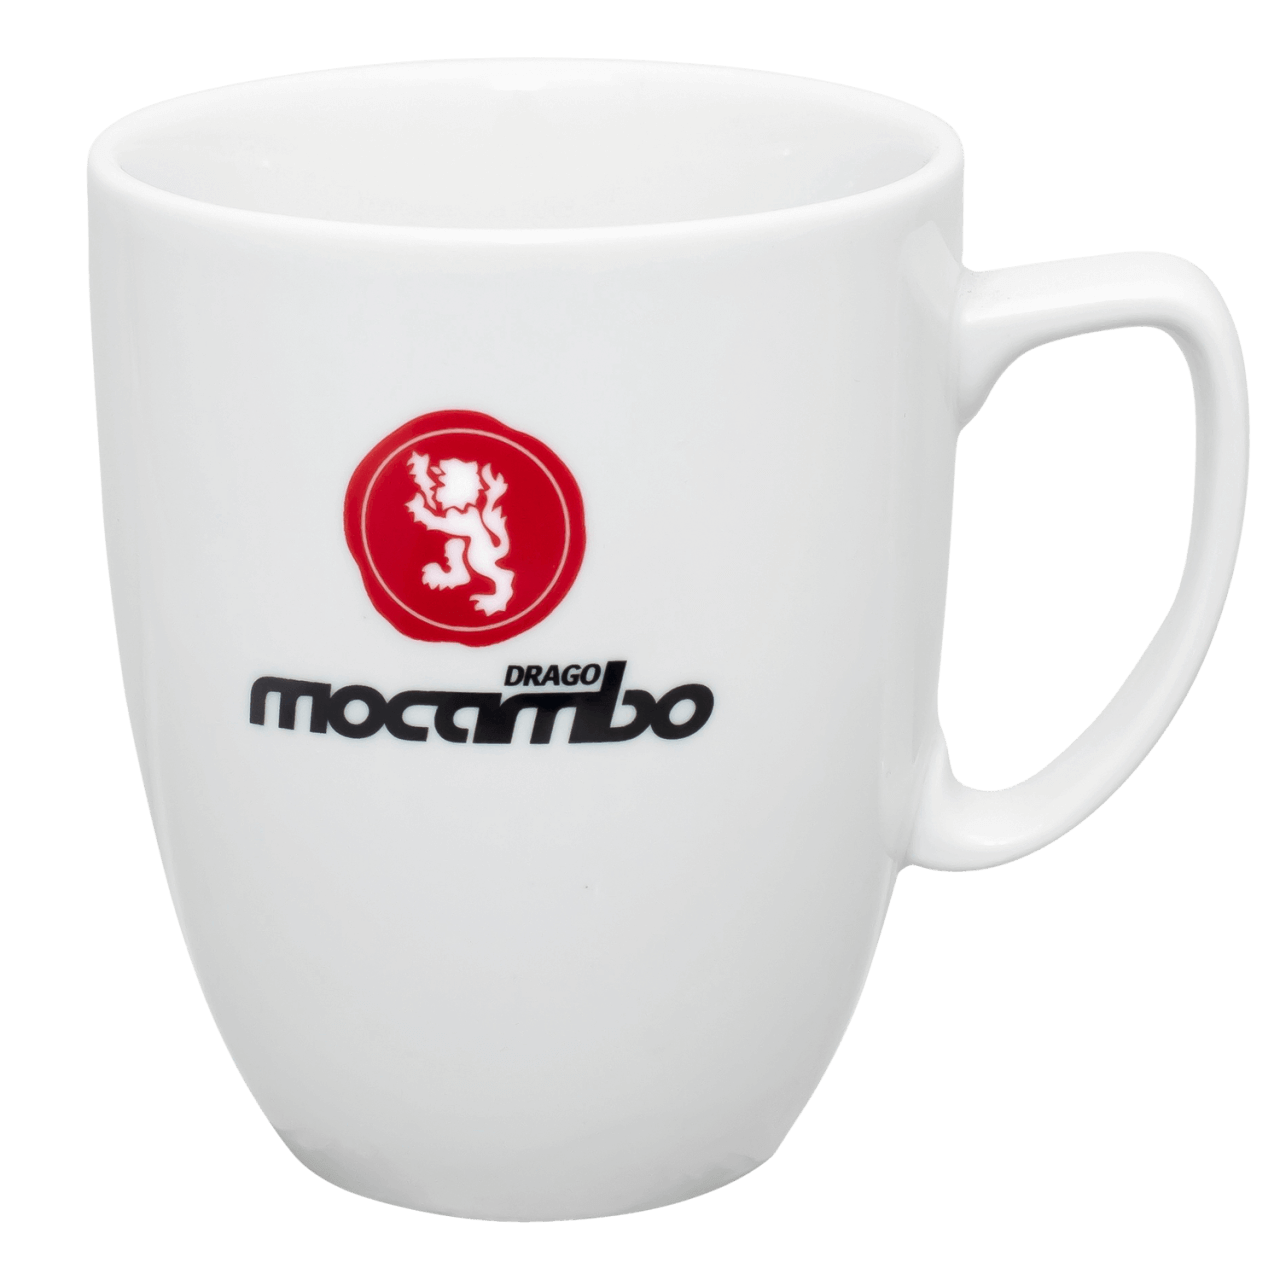 Mocambo Kaffeepott - 1 Stk